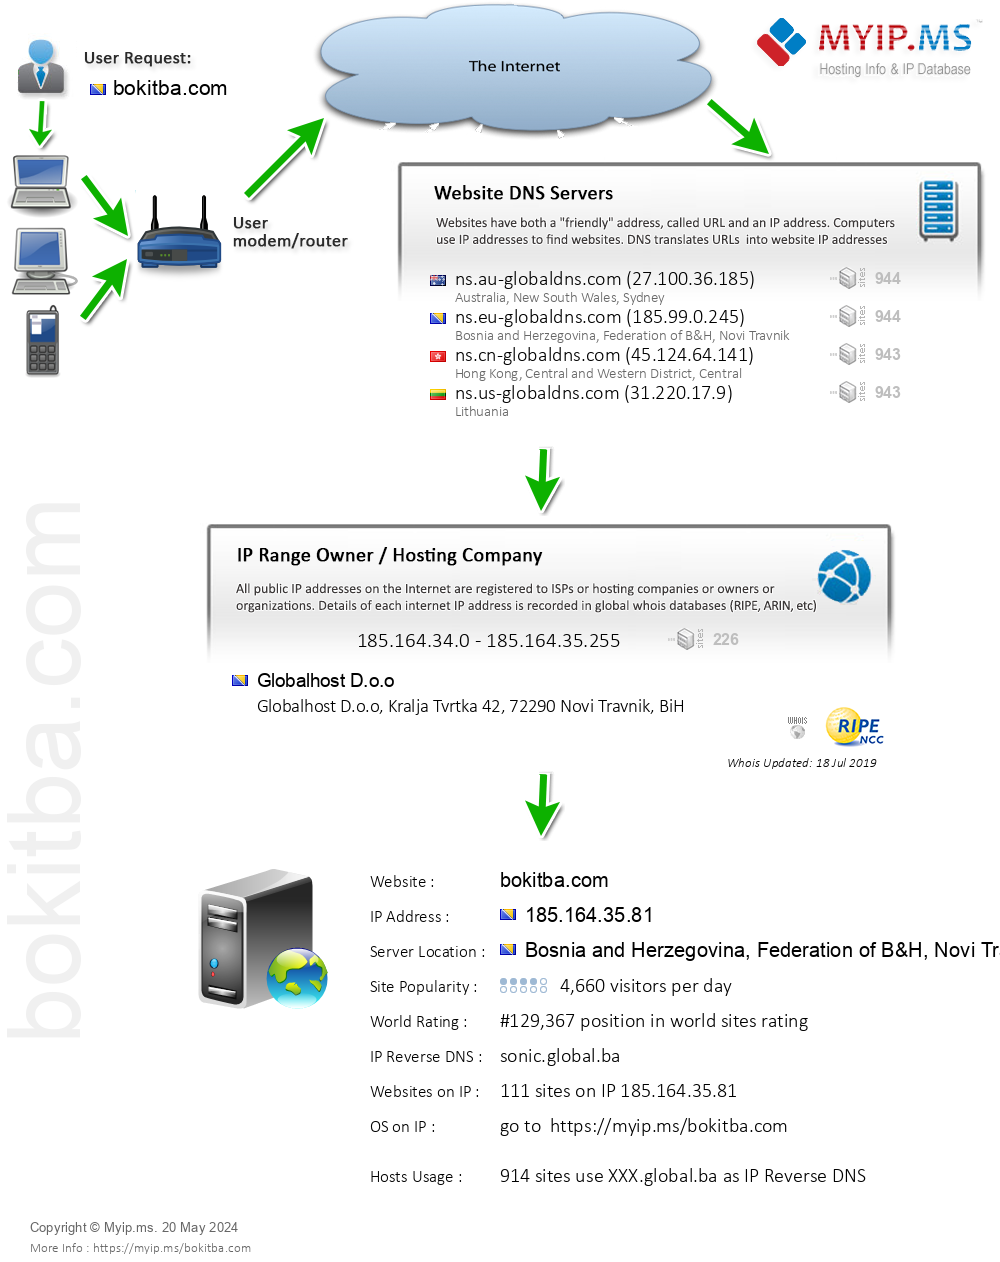 Bokitba.com - Website Hosting Visual IP Diagram